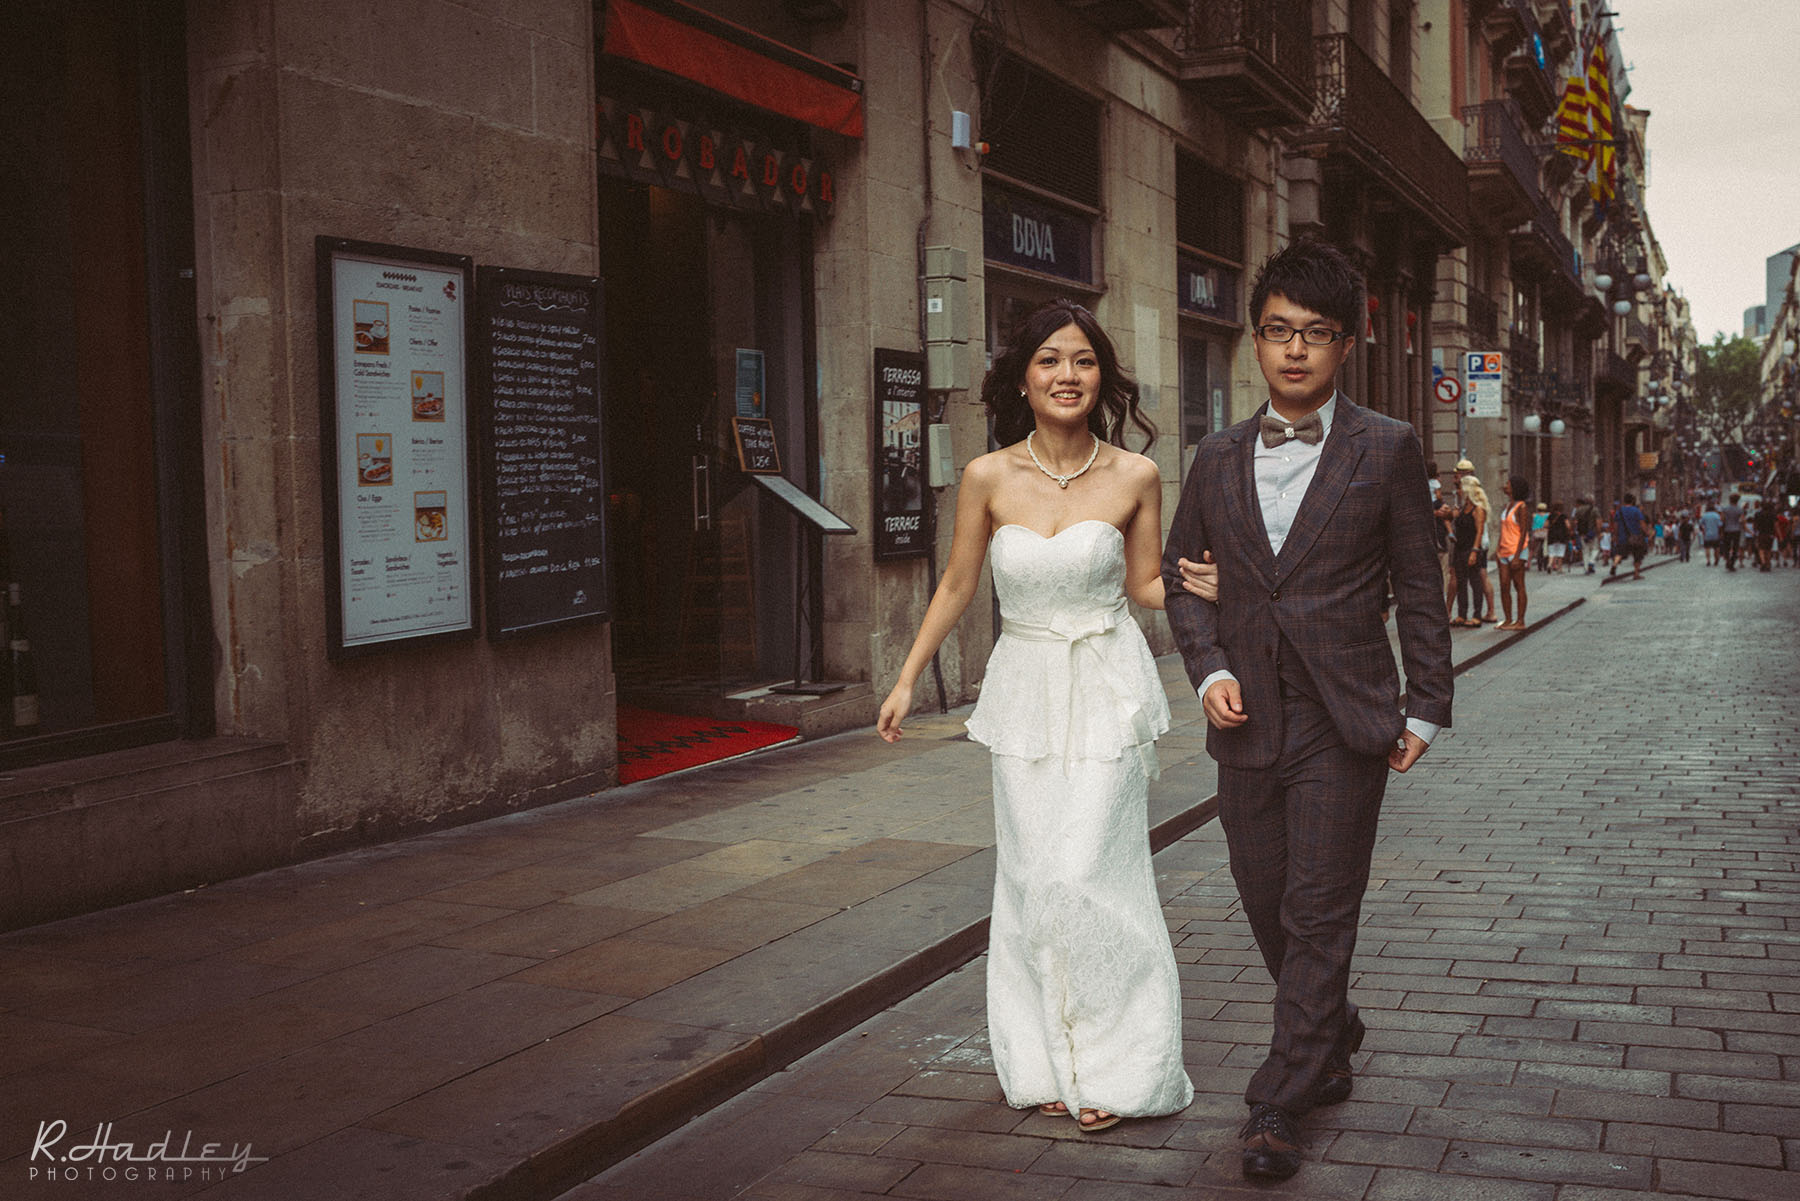 Wedding portrait photo session in Barcelona